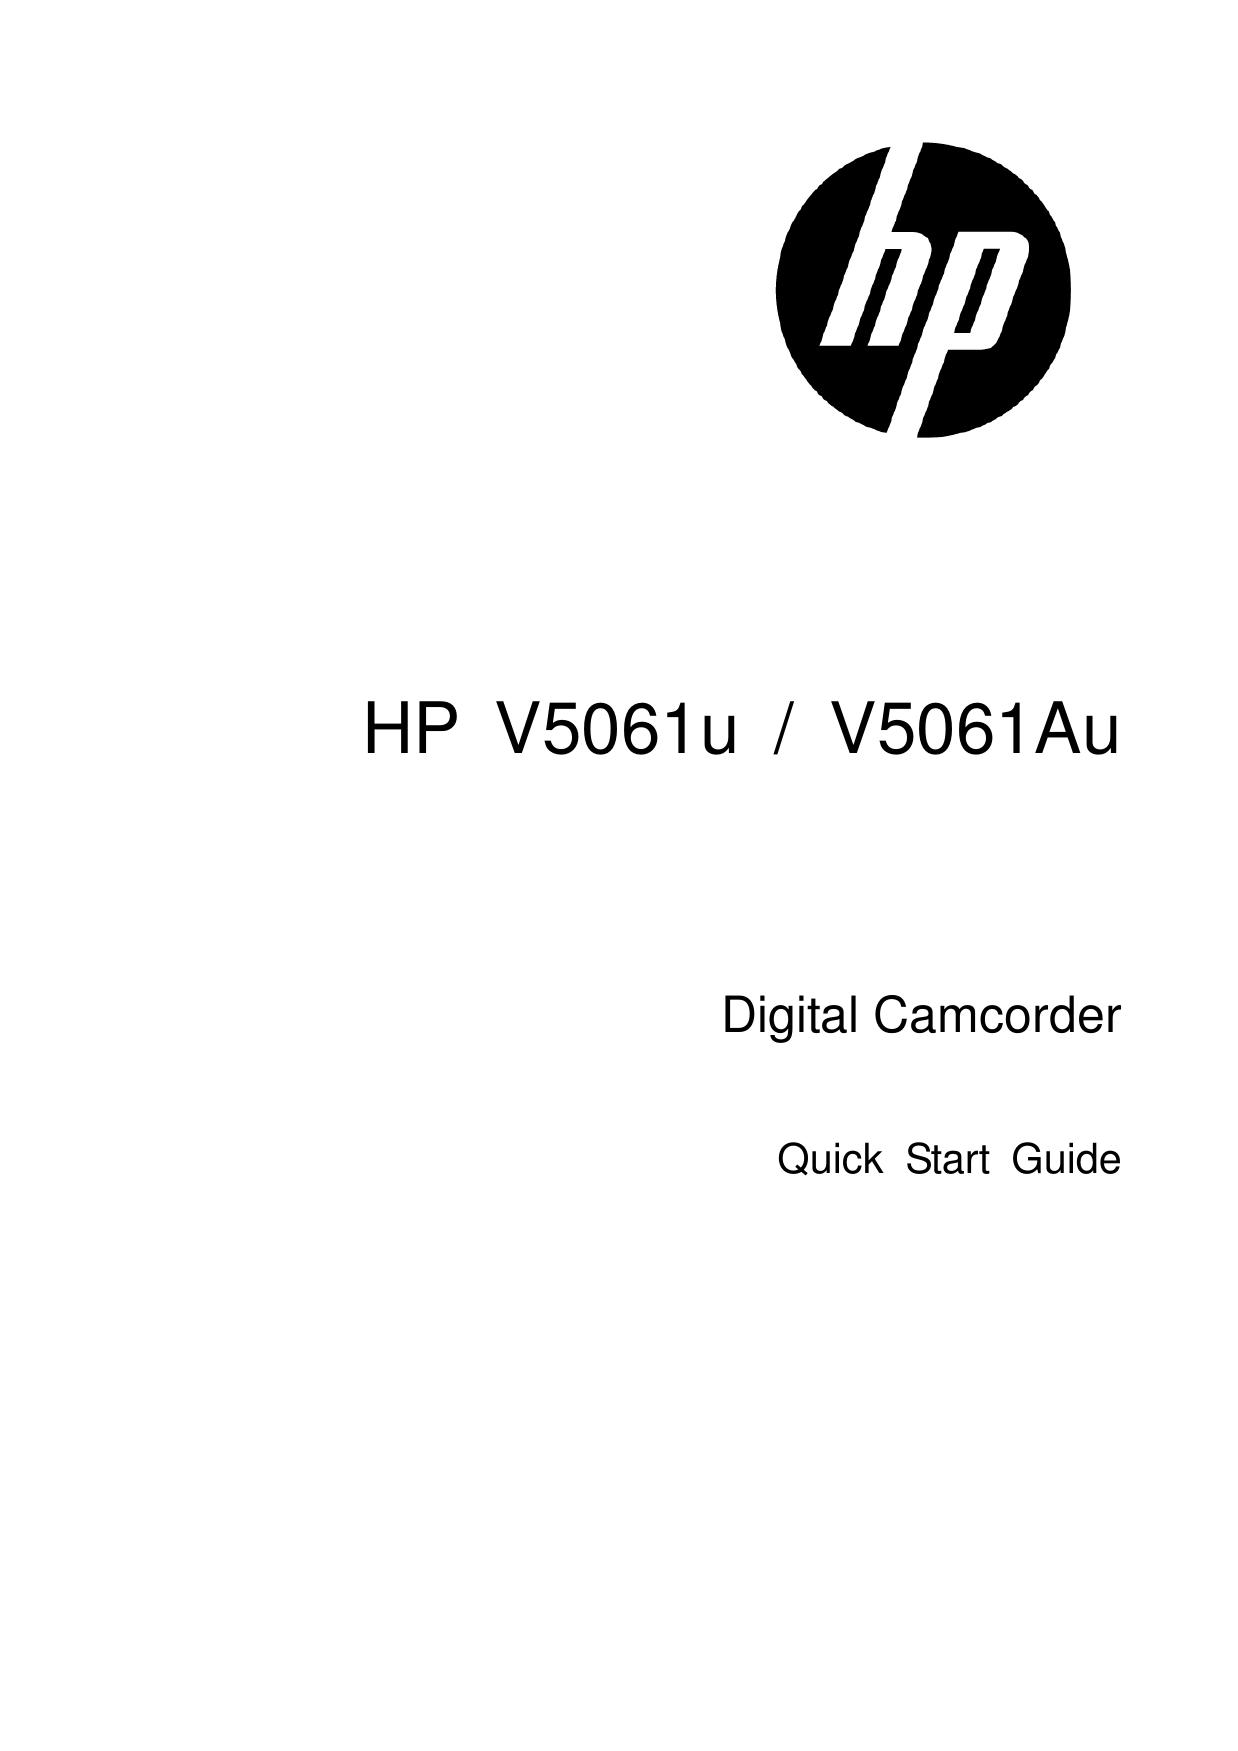 HP (Hewlett-Packard) V5061AU Camcorder User Manual